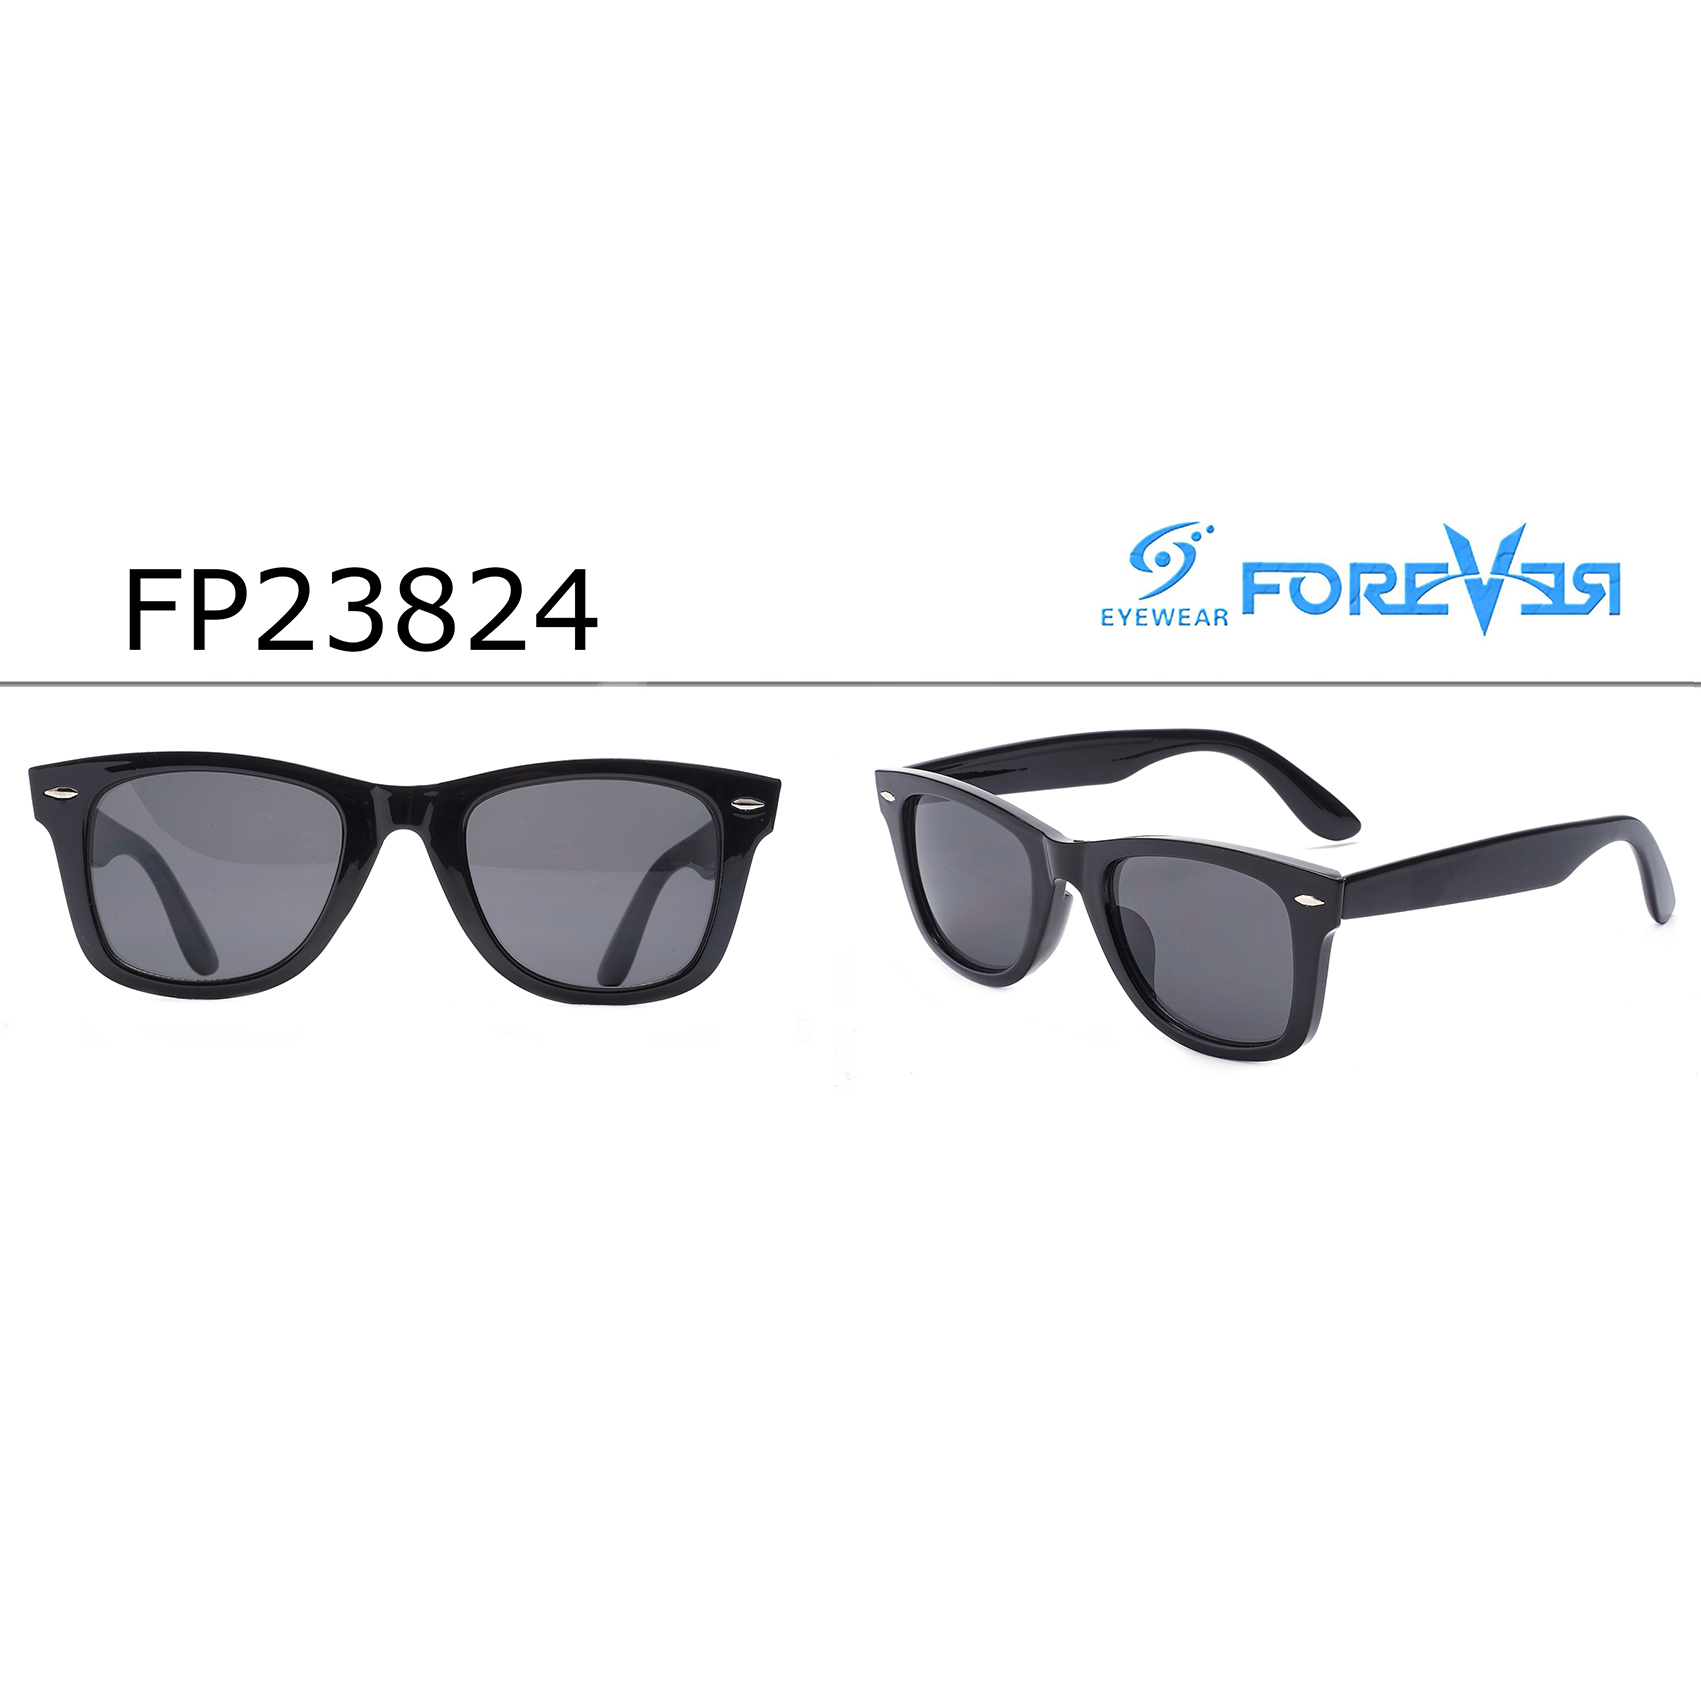 Fashionable Black Mirrored Wayfarer Sunglasses Cheap Eco Friendly Sunglasses